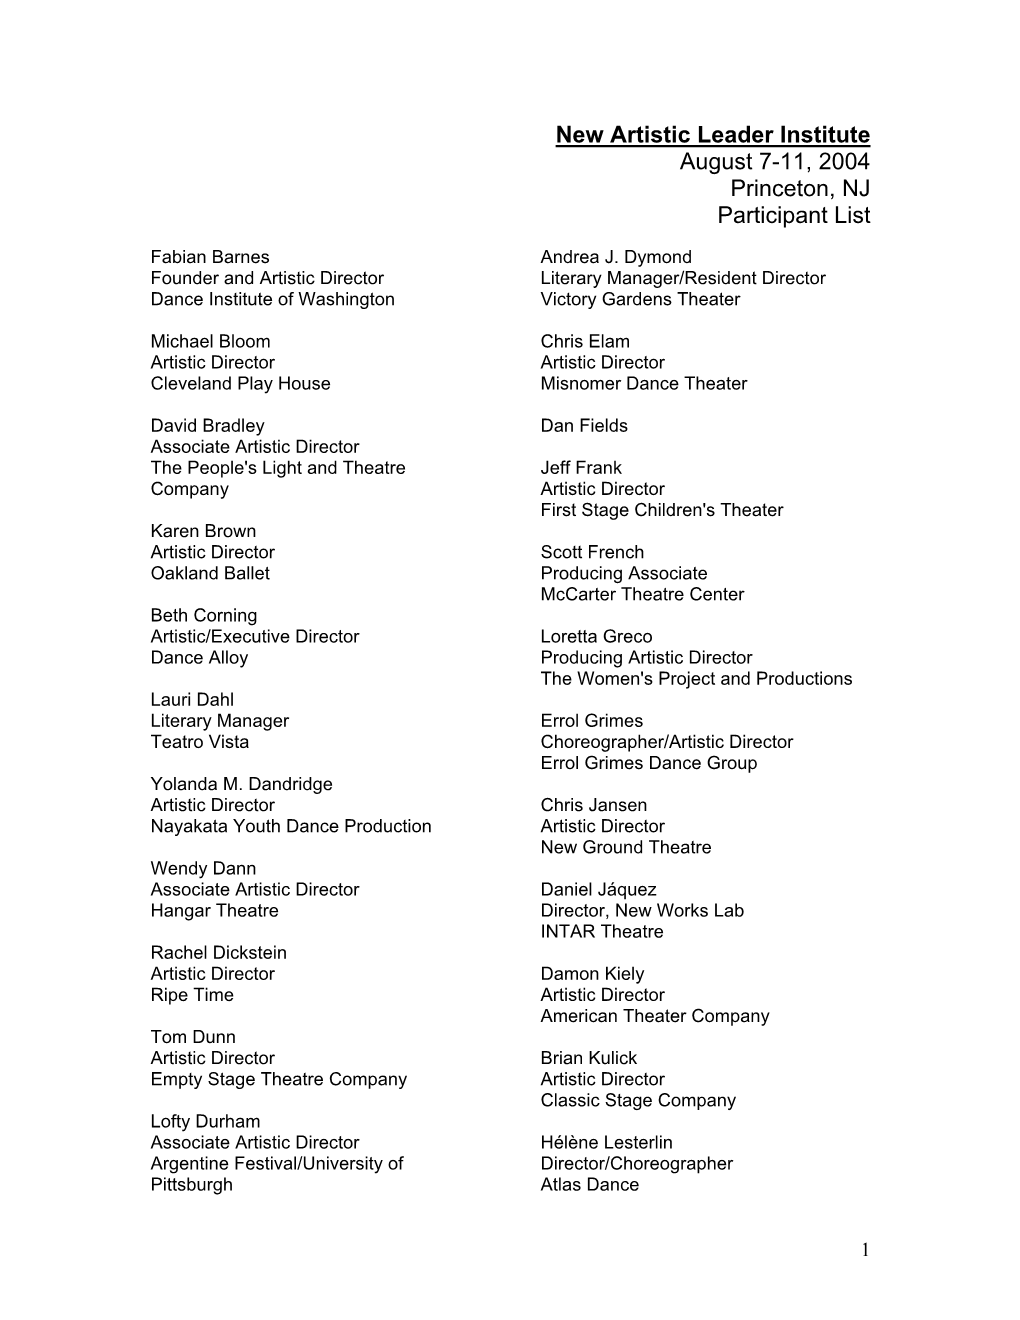 New Artistic Leader Institute August 7-11, 2004 Princeton, NJ Participant List